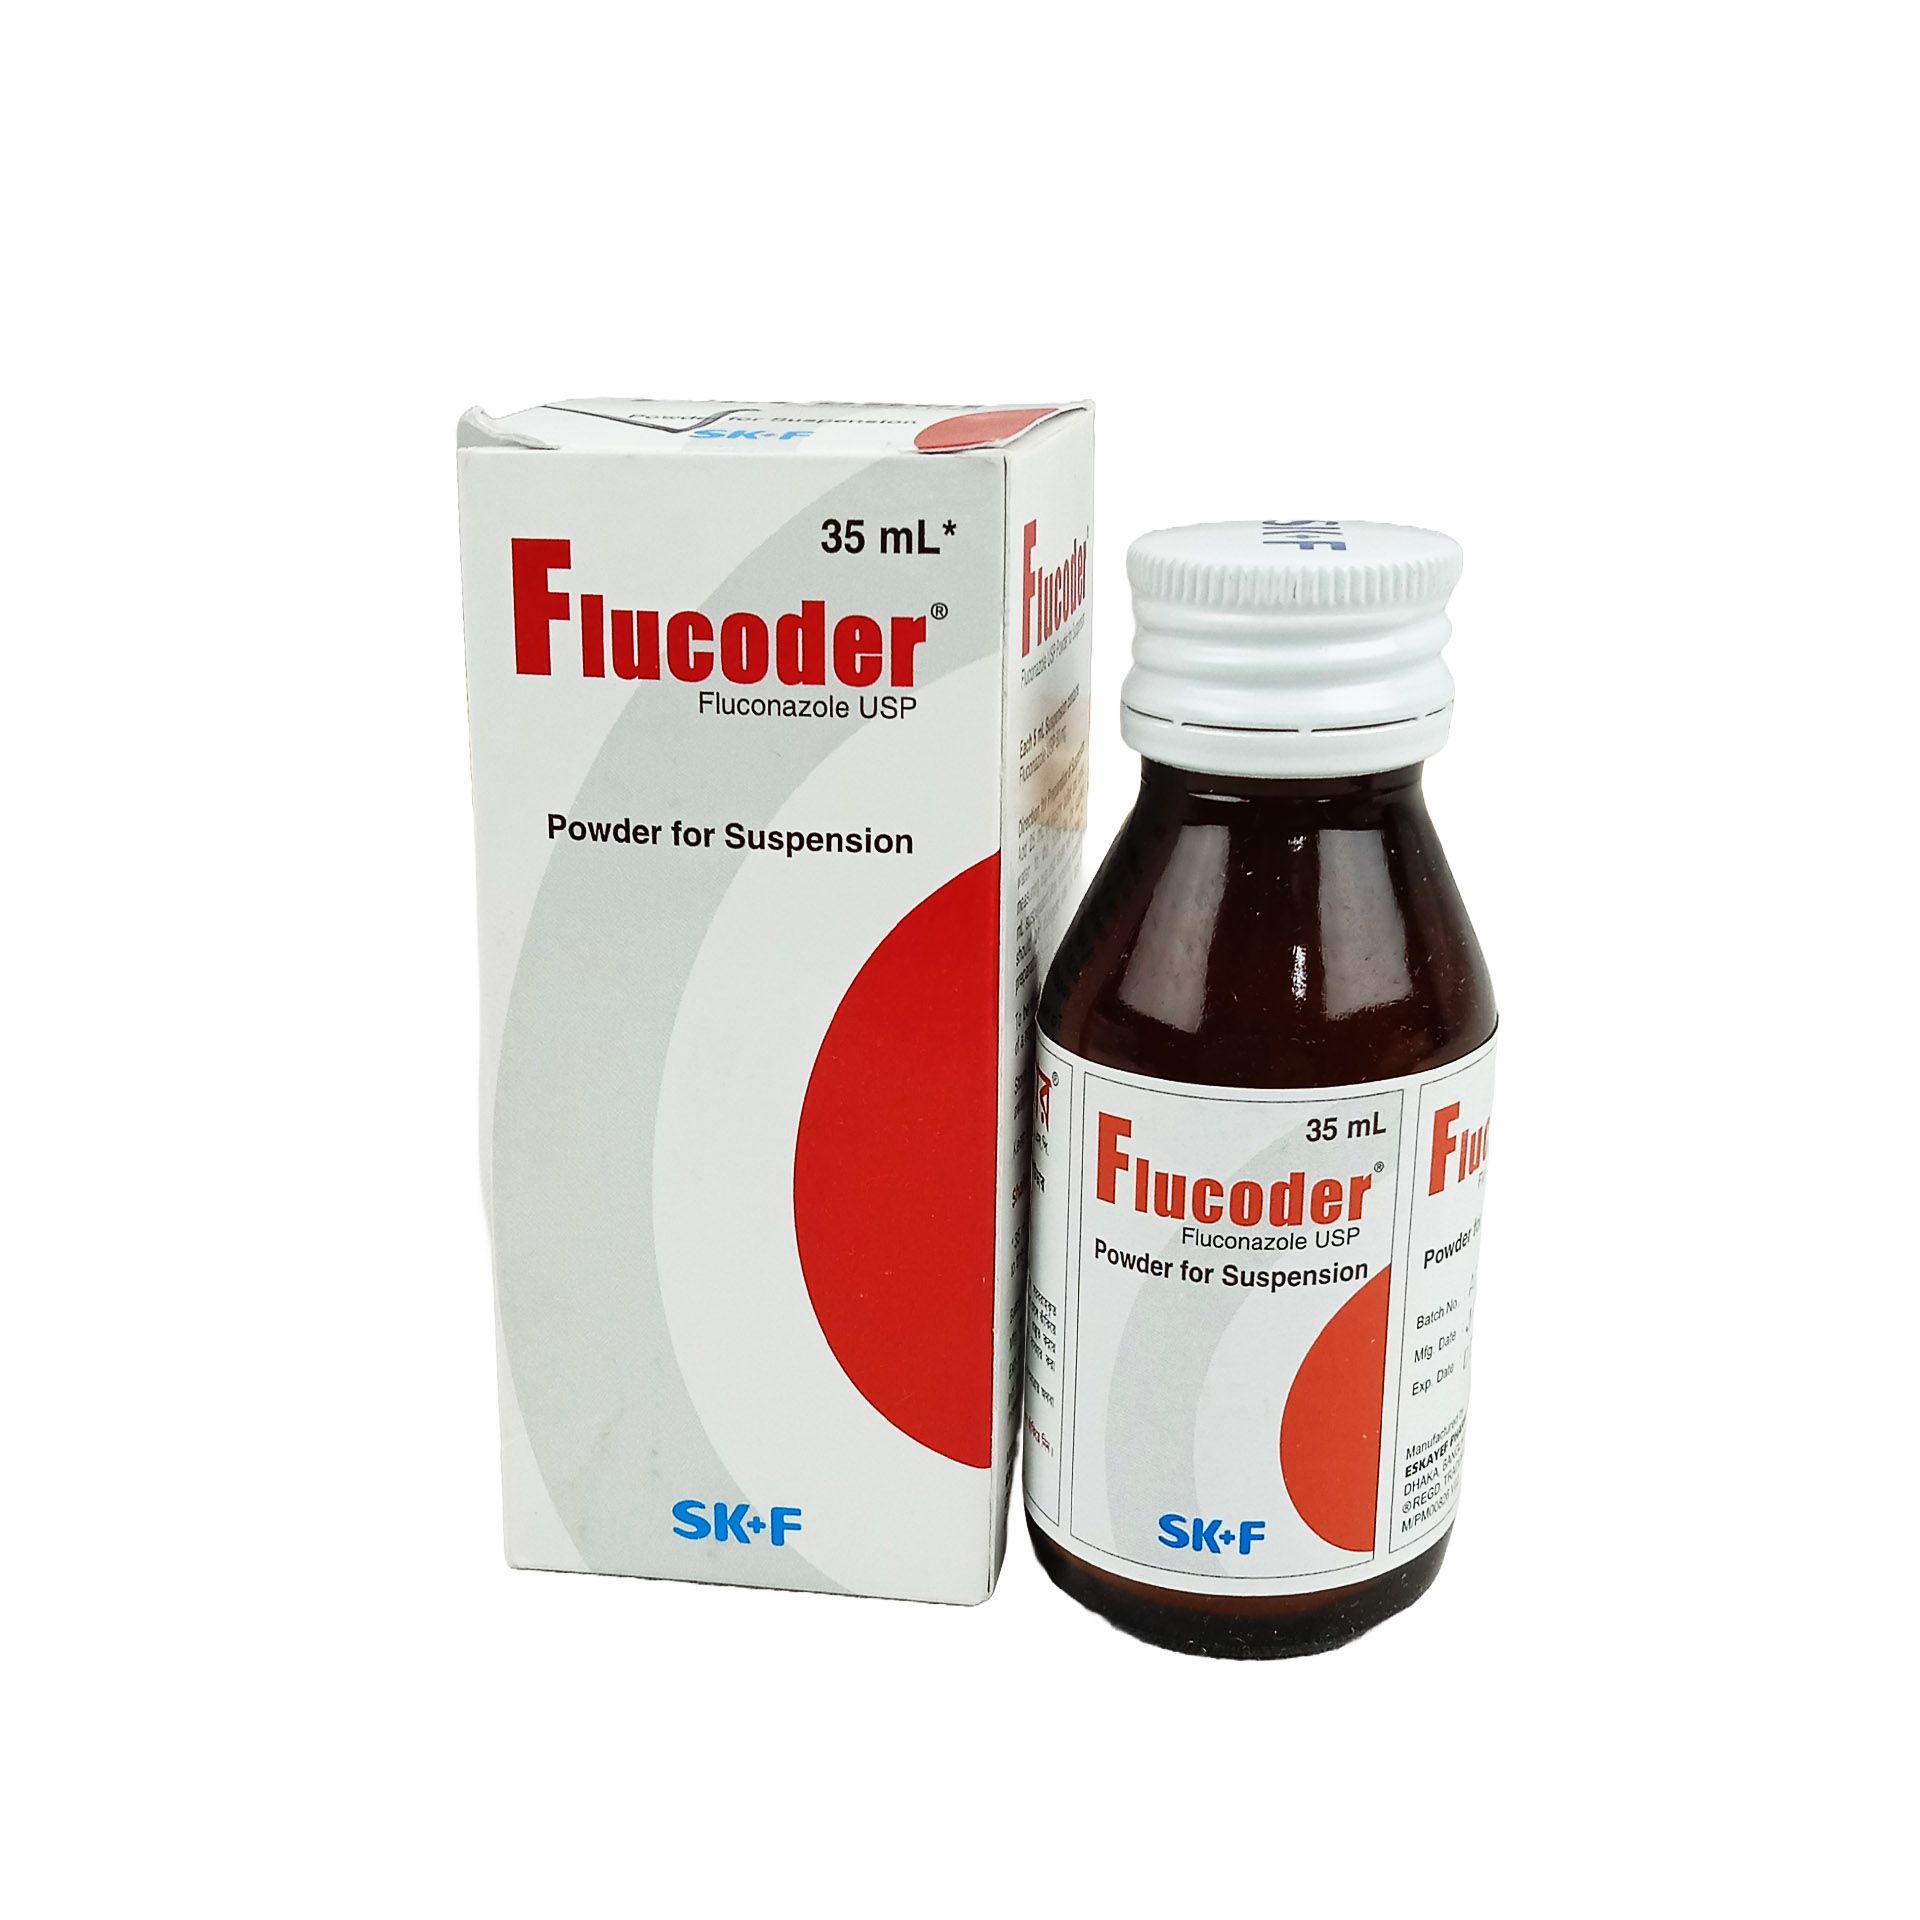 Flucoder 50mg/5ml Powder for Suspension